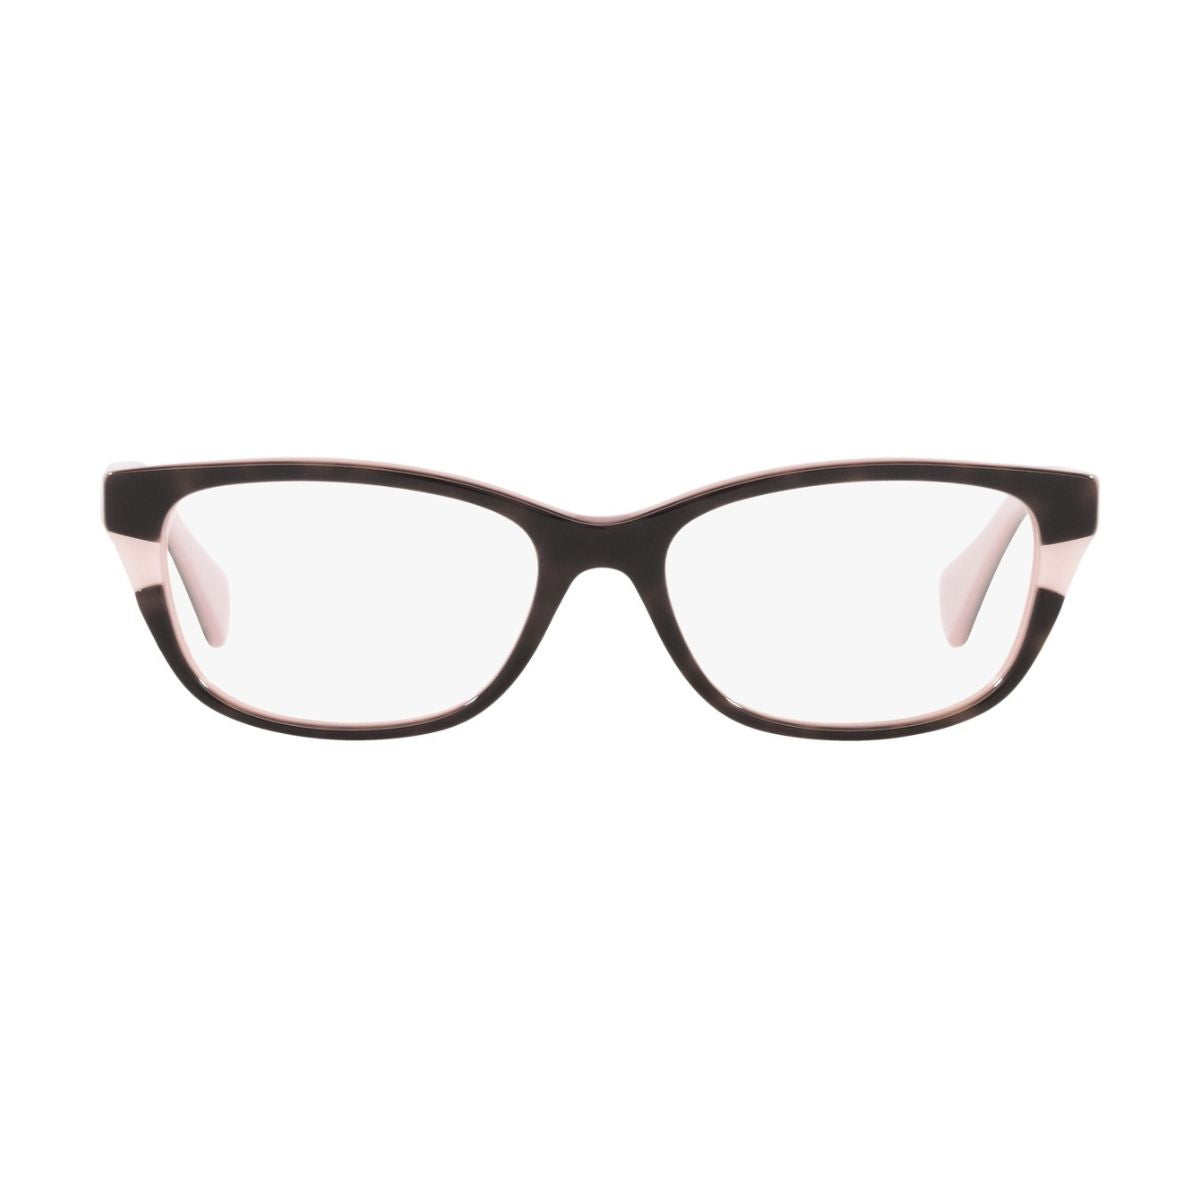 "best Ralph Lauren 7126 599 cat eye eyewear frame for women's at optorium"